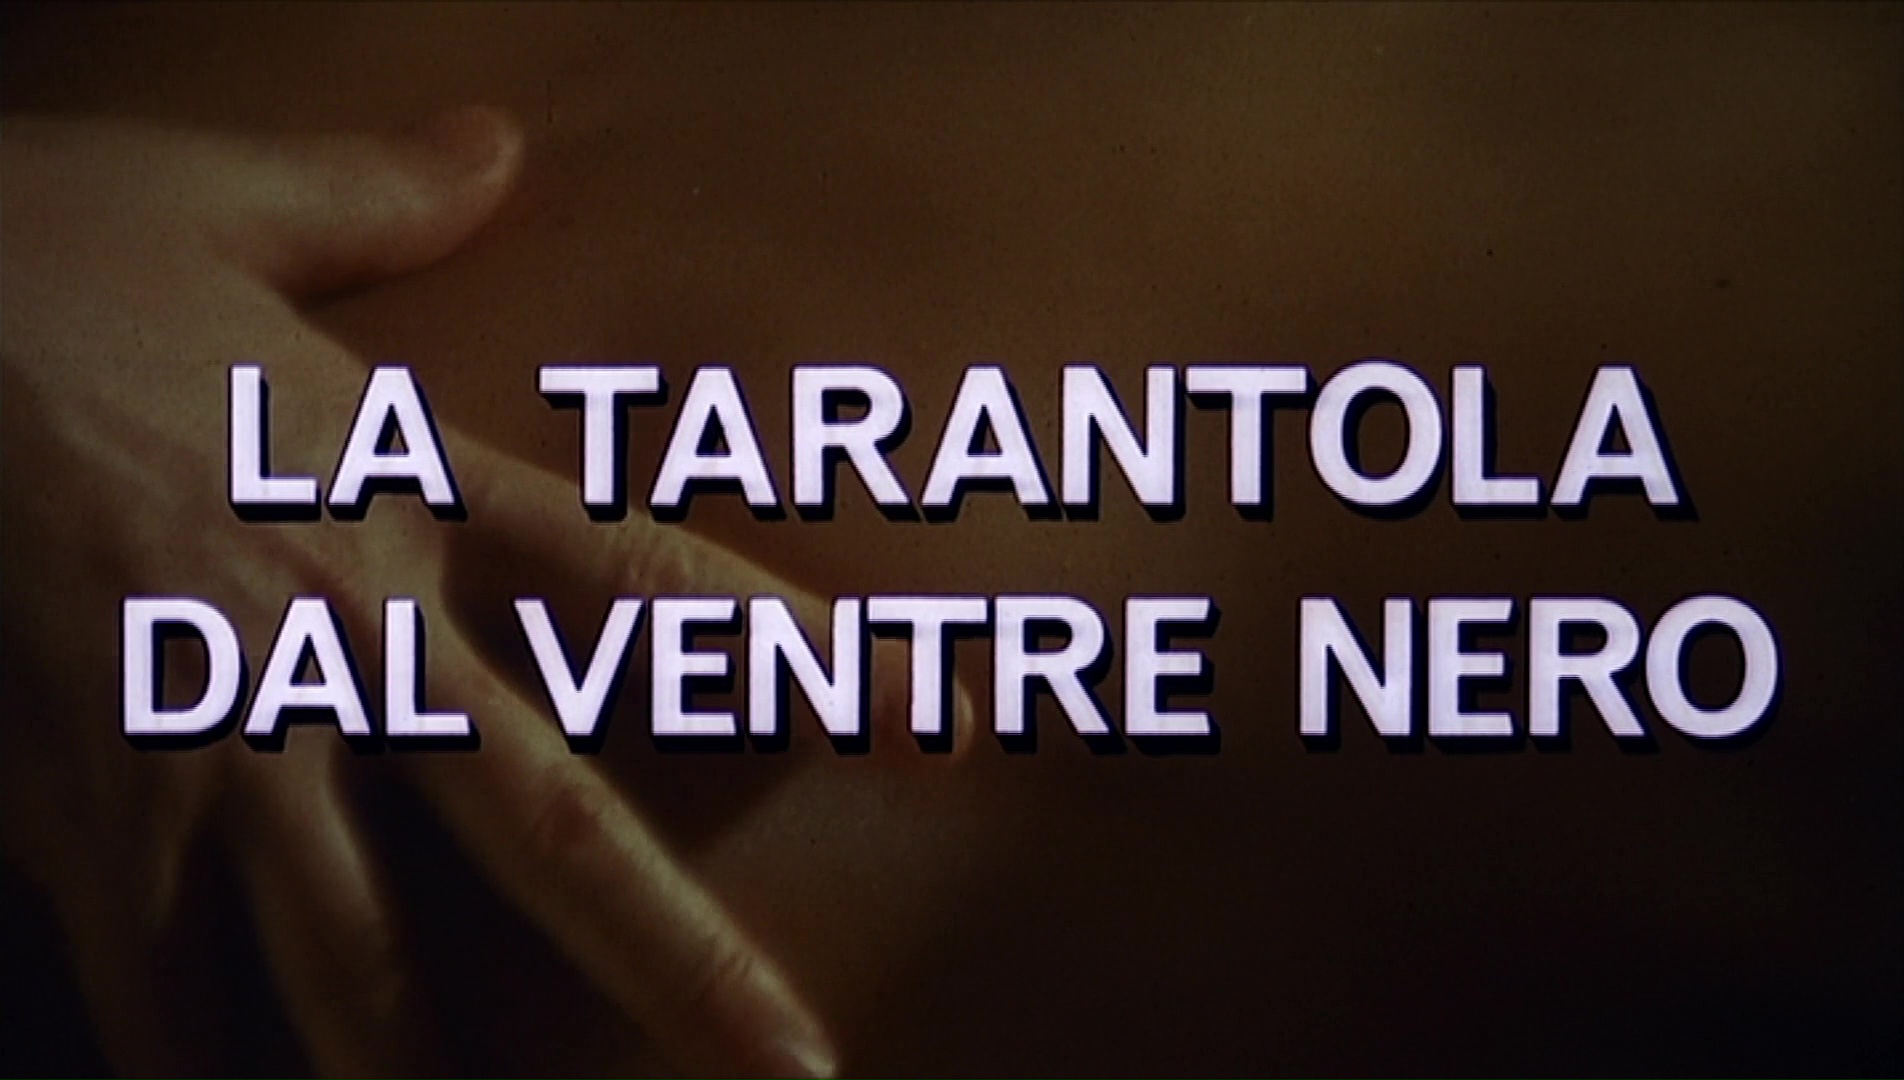 La tarantola dal ventre nero (1971) title.jpg